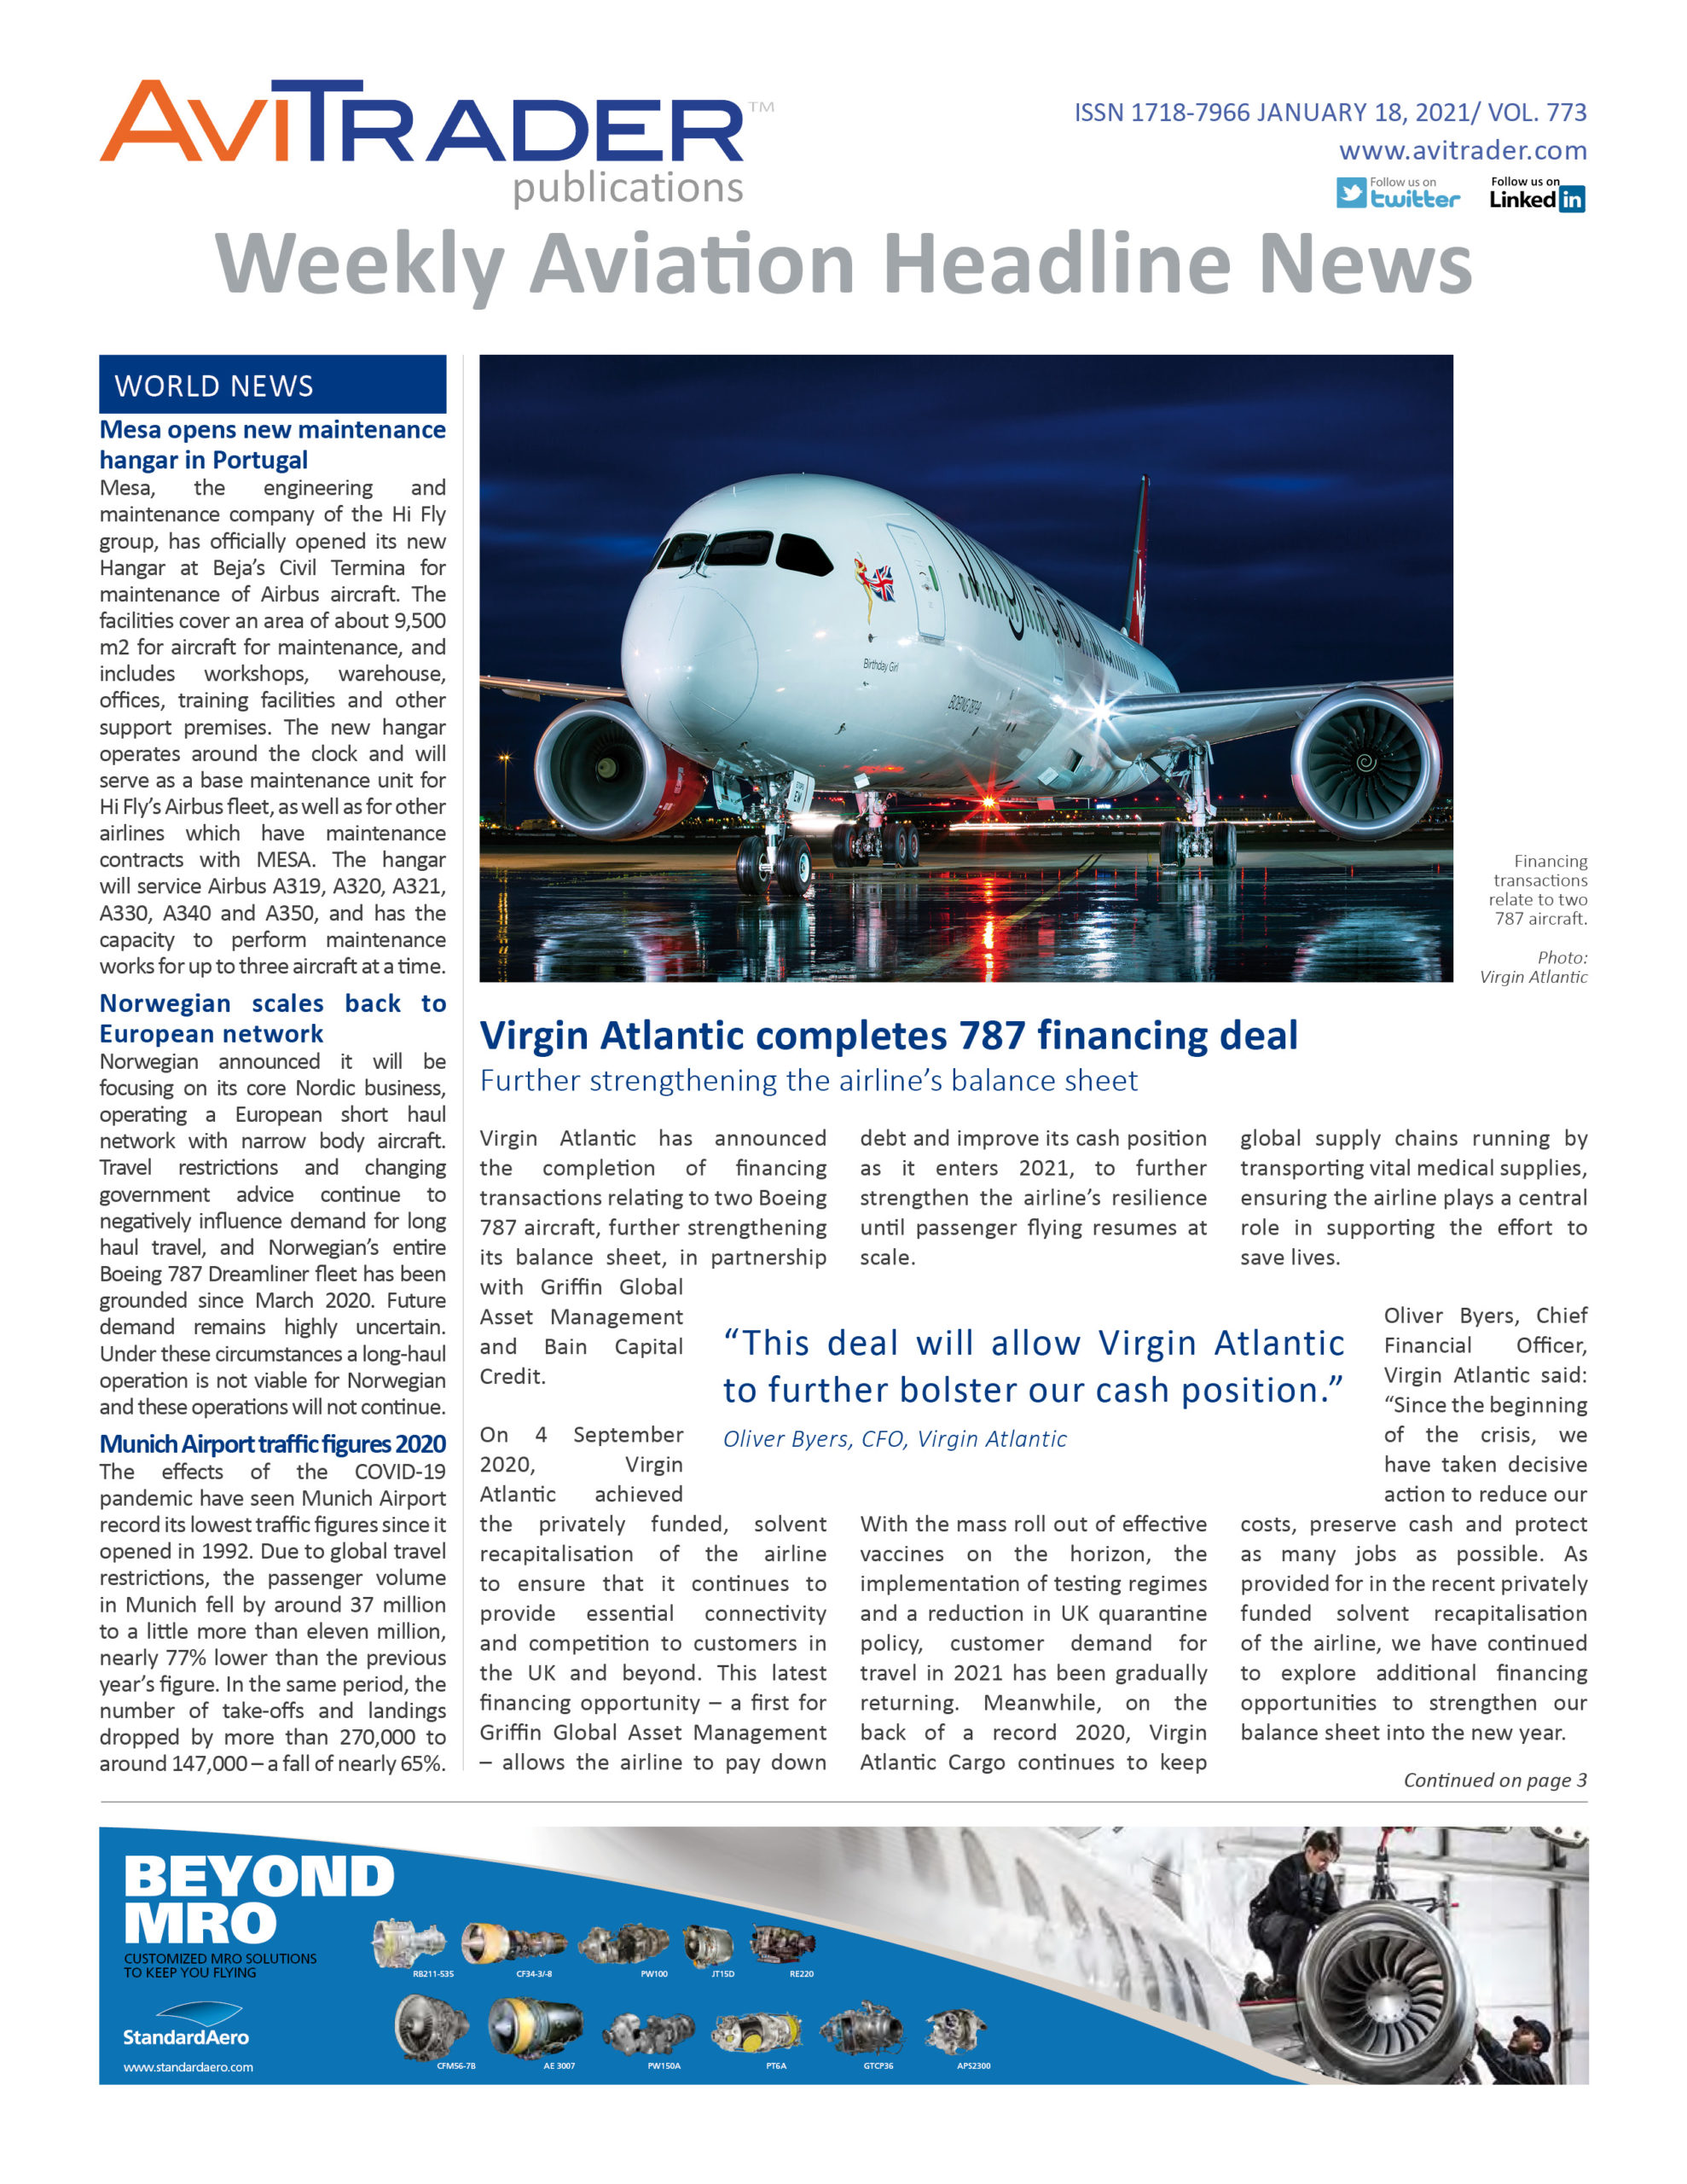 AviTrader_Weekly_Headline_News_Cover_2021-01-18